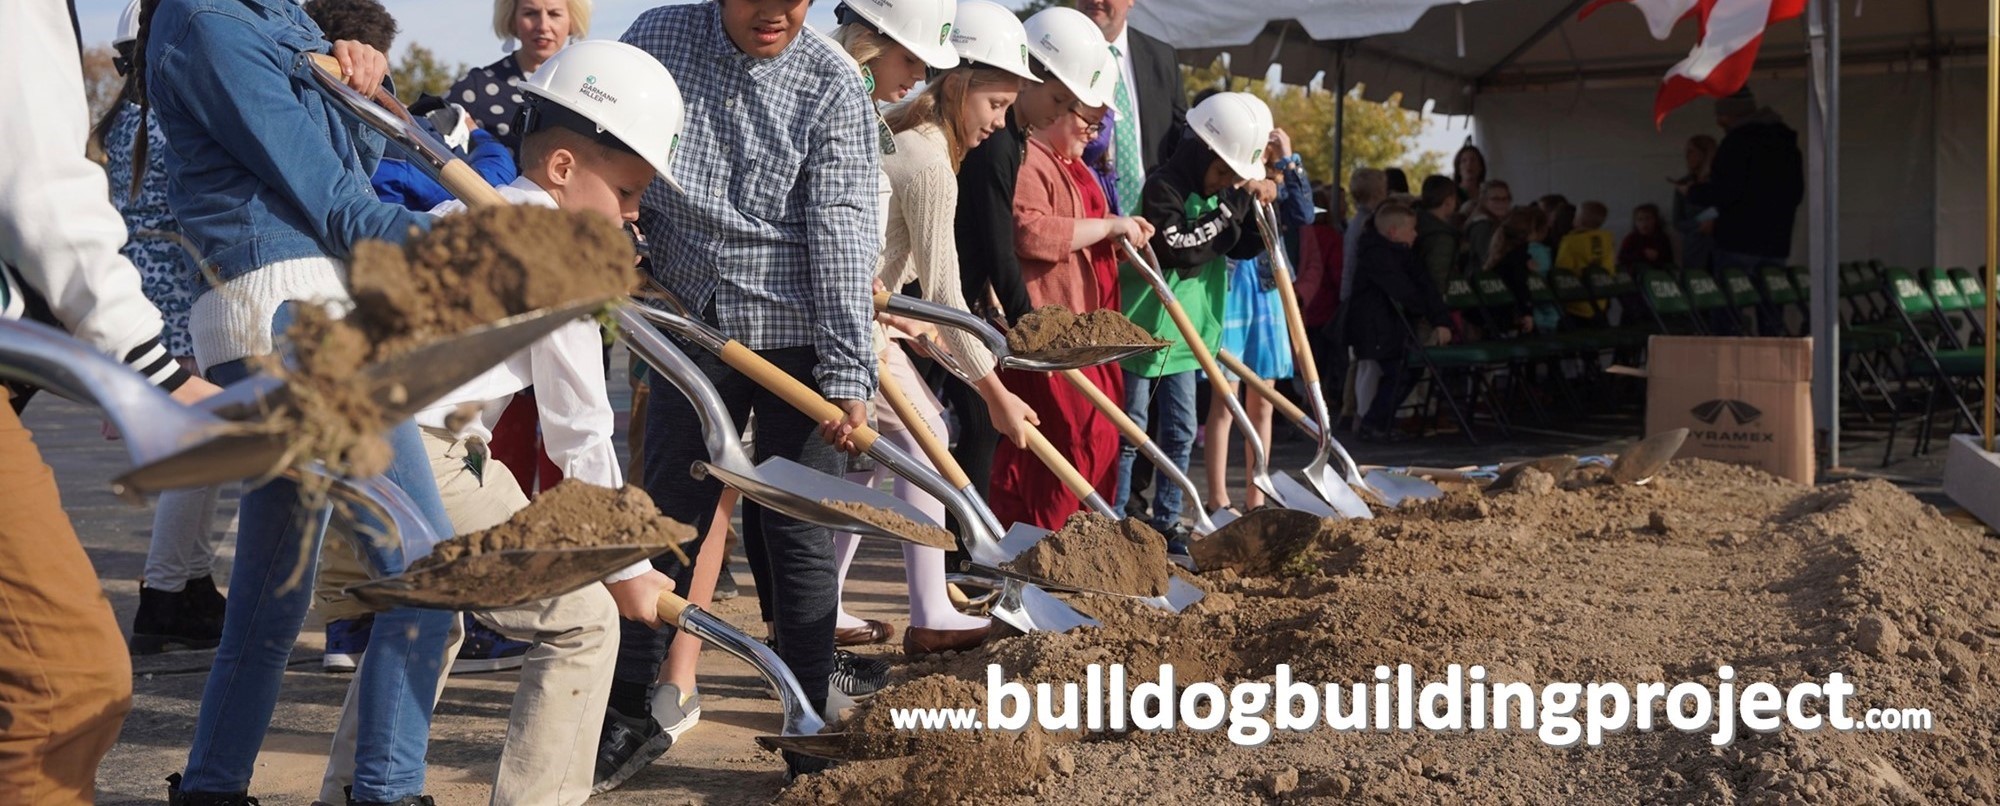 Bulldog Building Project 2